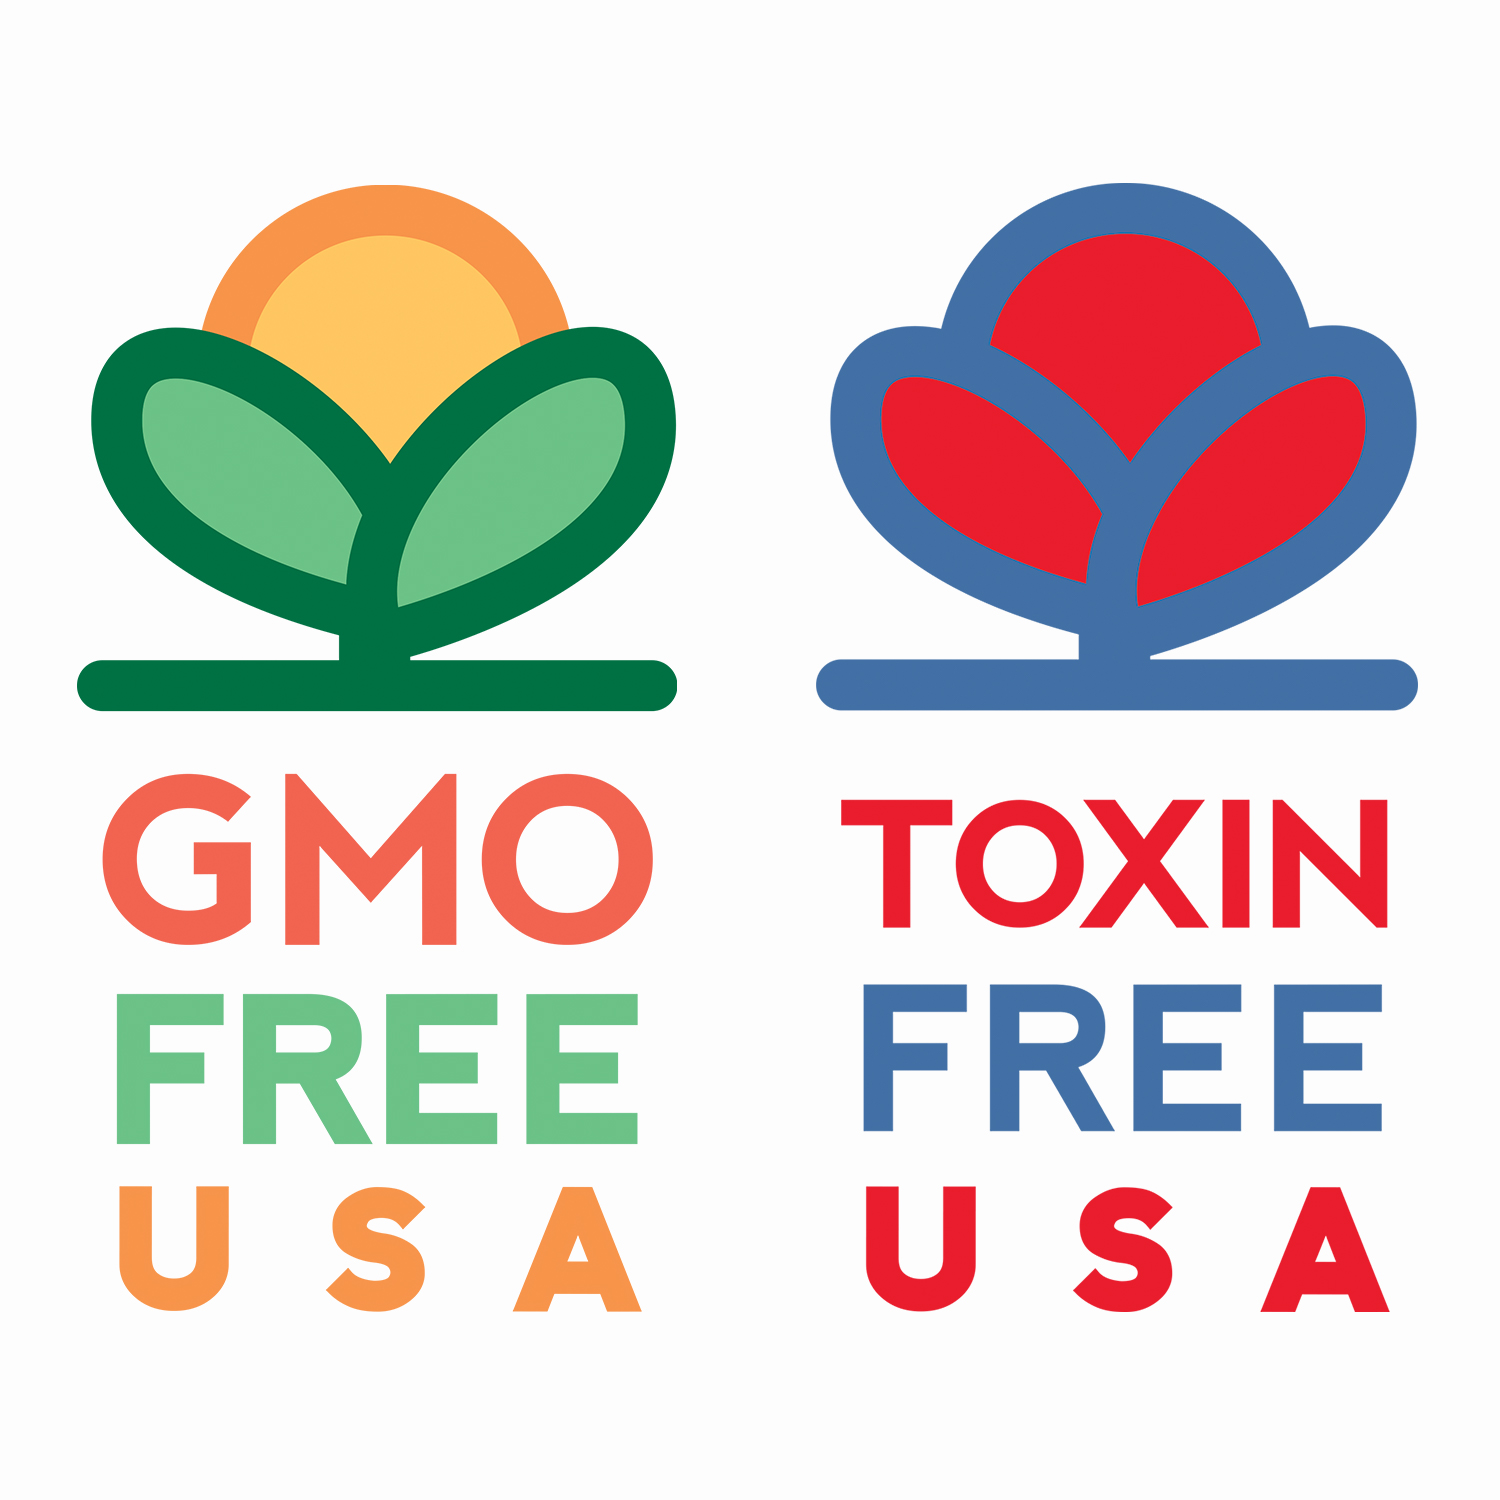 GMO Free USA/Toxin Free USA